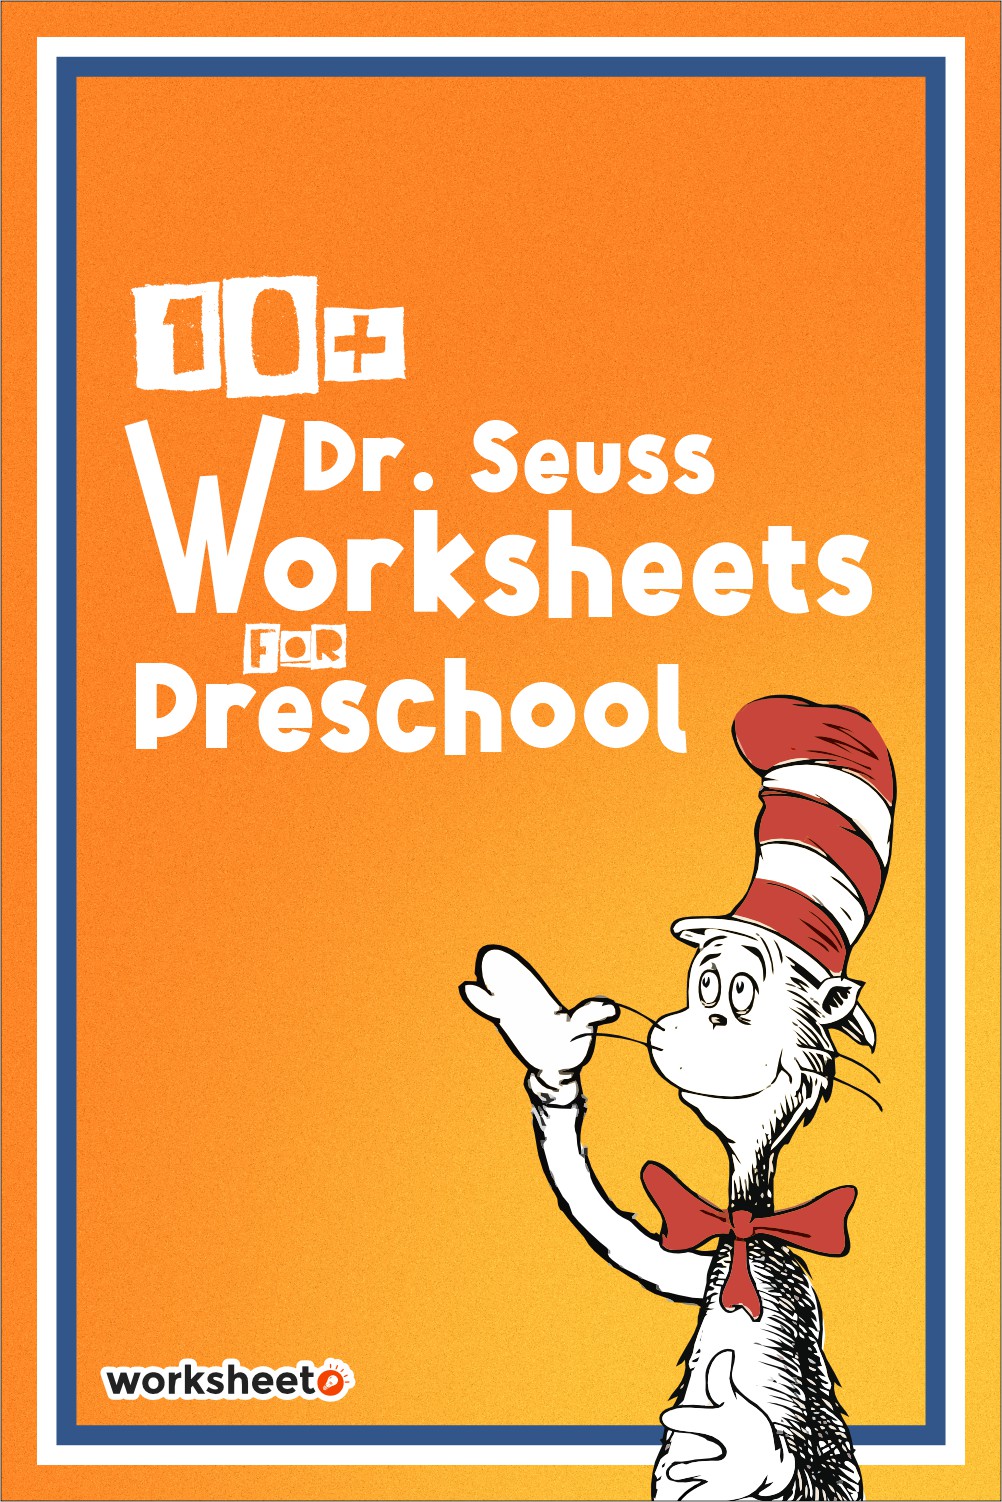 Dr. Seuss Worksheets for Preschool